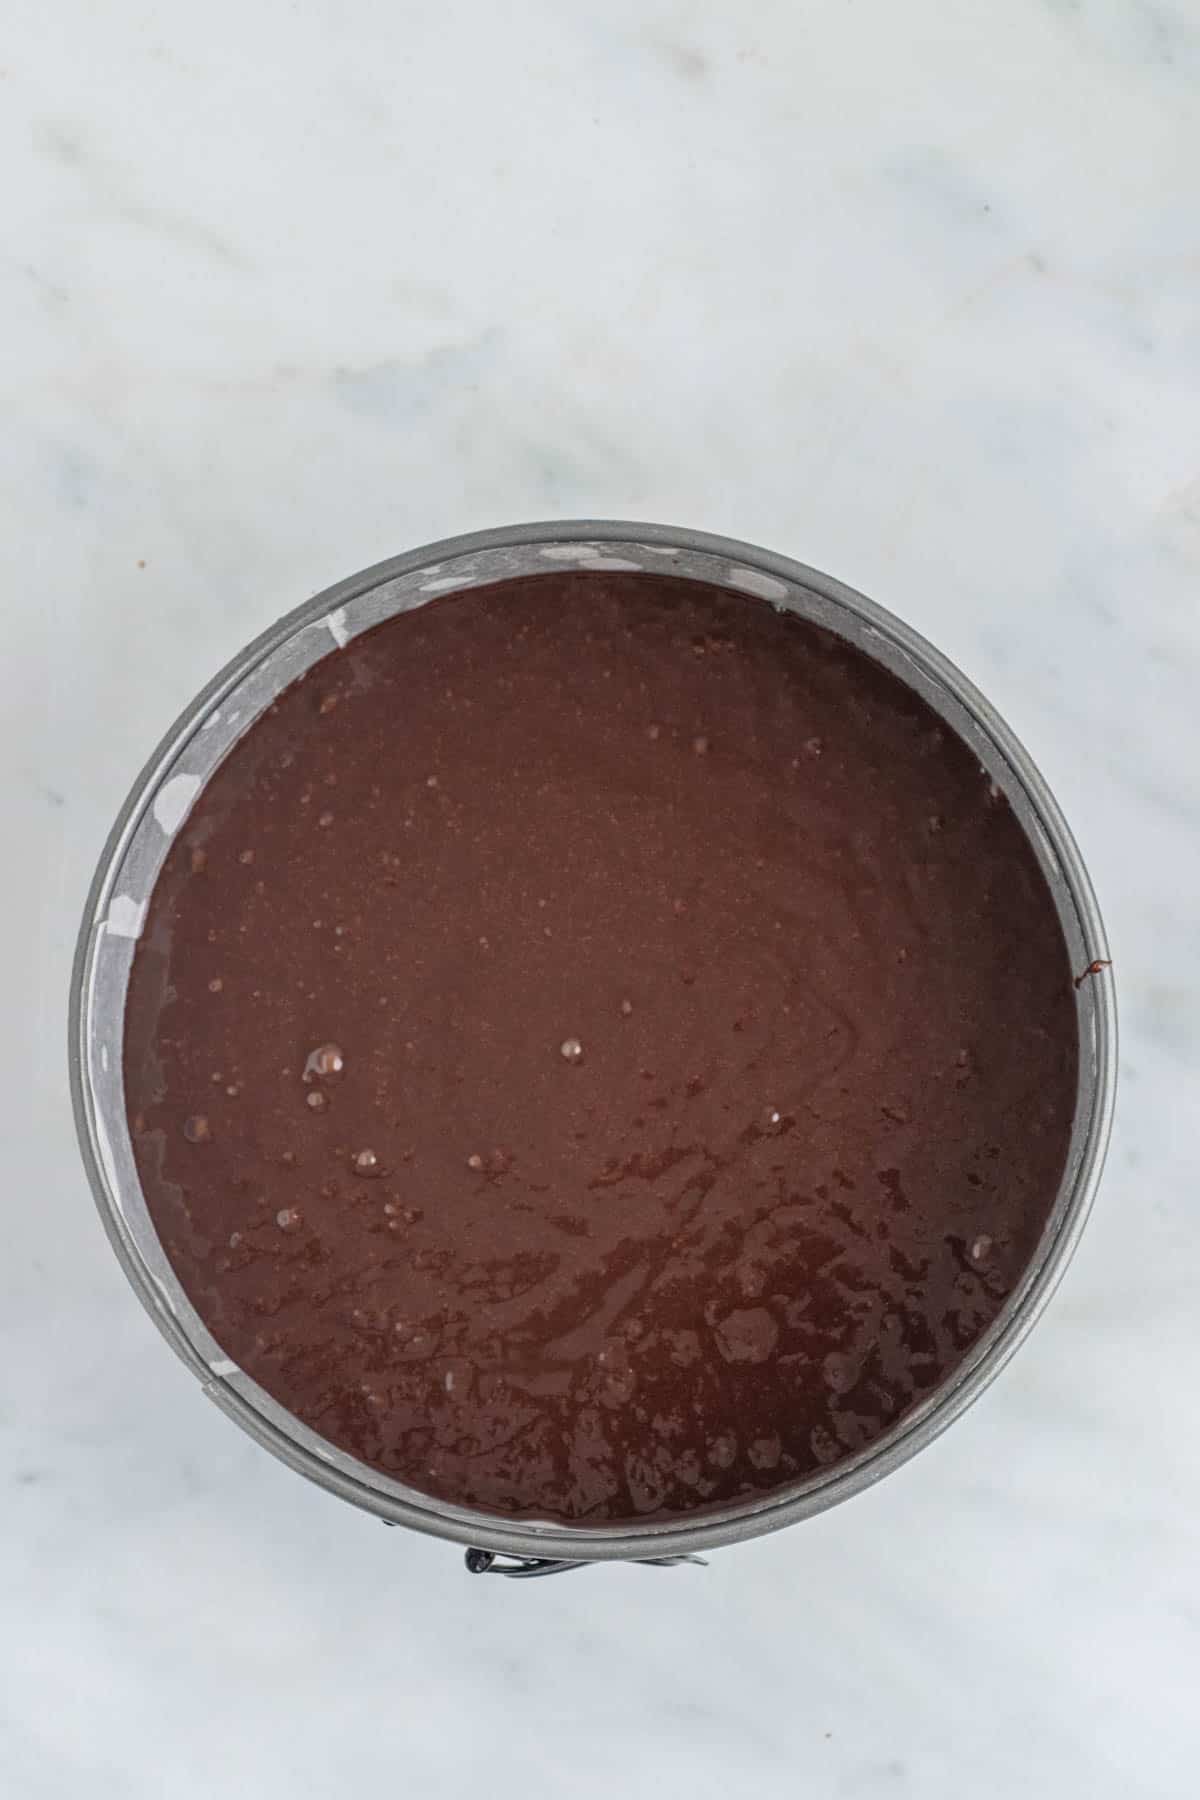 Flourless chocolate torte batter in a round springform cake pan.